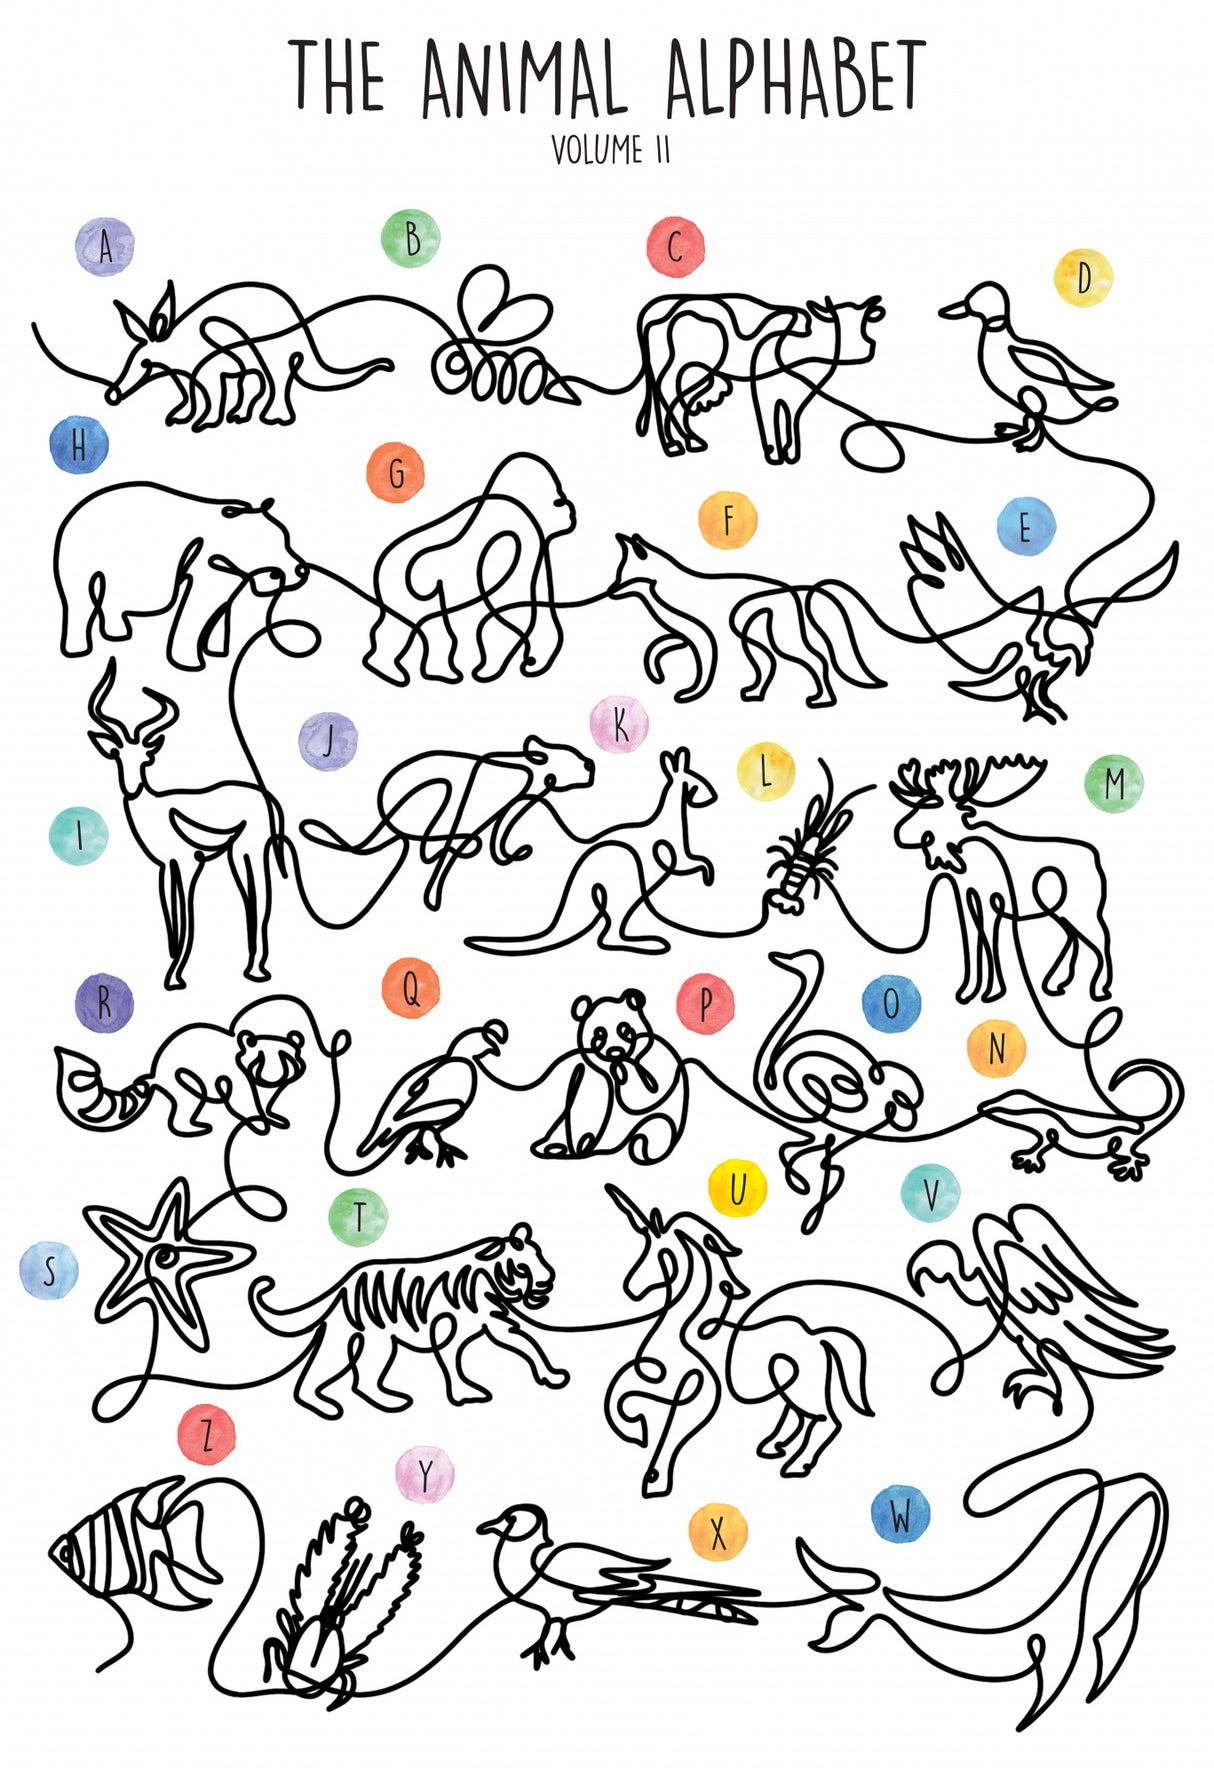 The Animal Alphabet Volume 2 Poster och Canvastavla